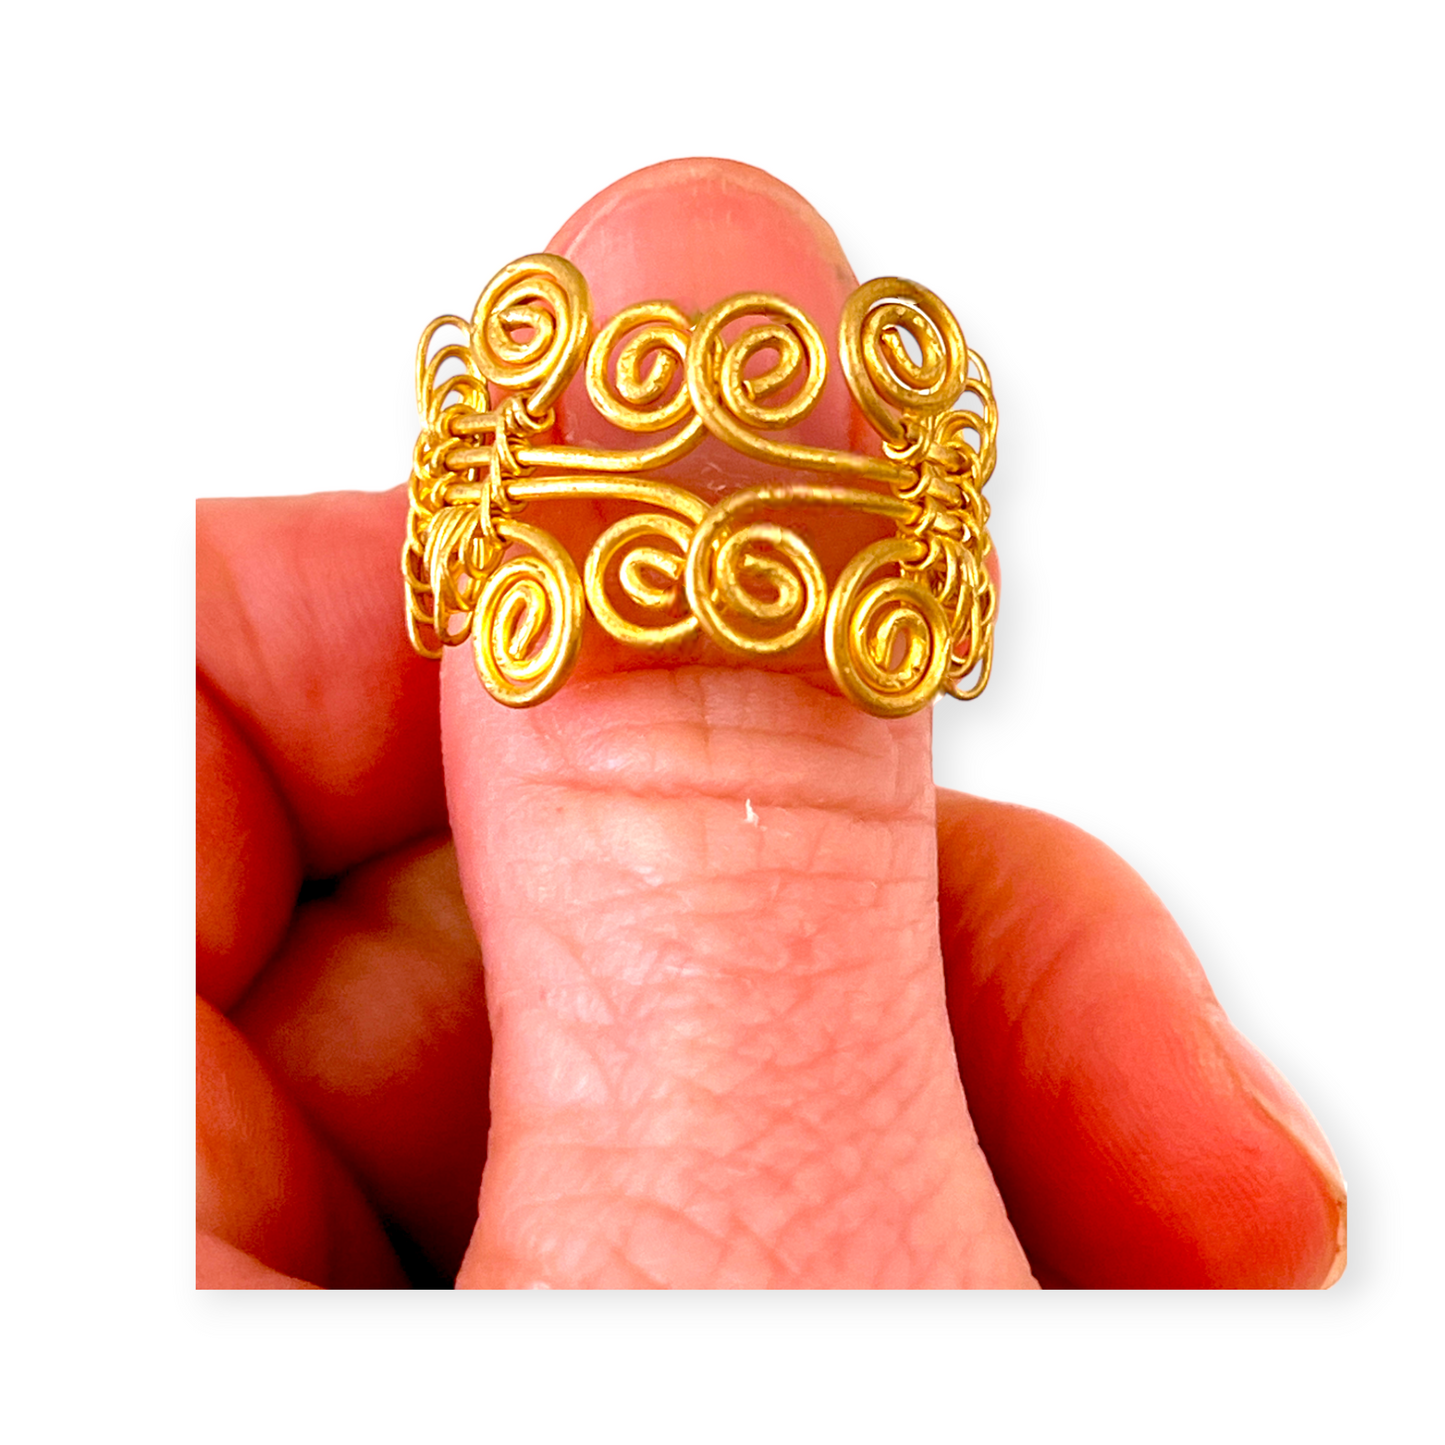 Woven statement ring with zig zag pattern made of brass - Sundara Joon